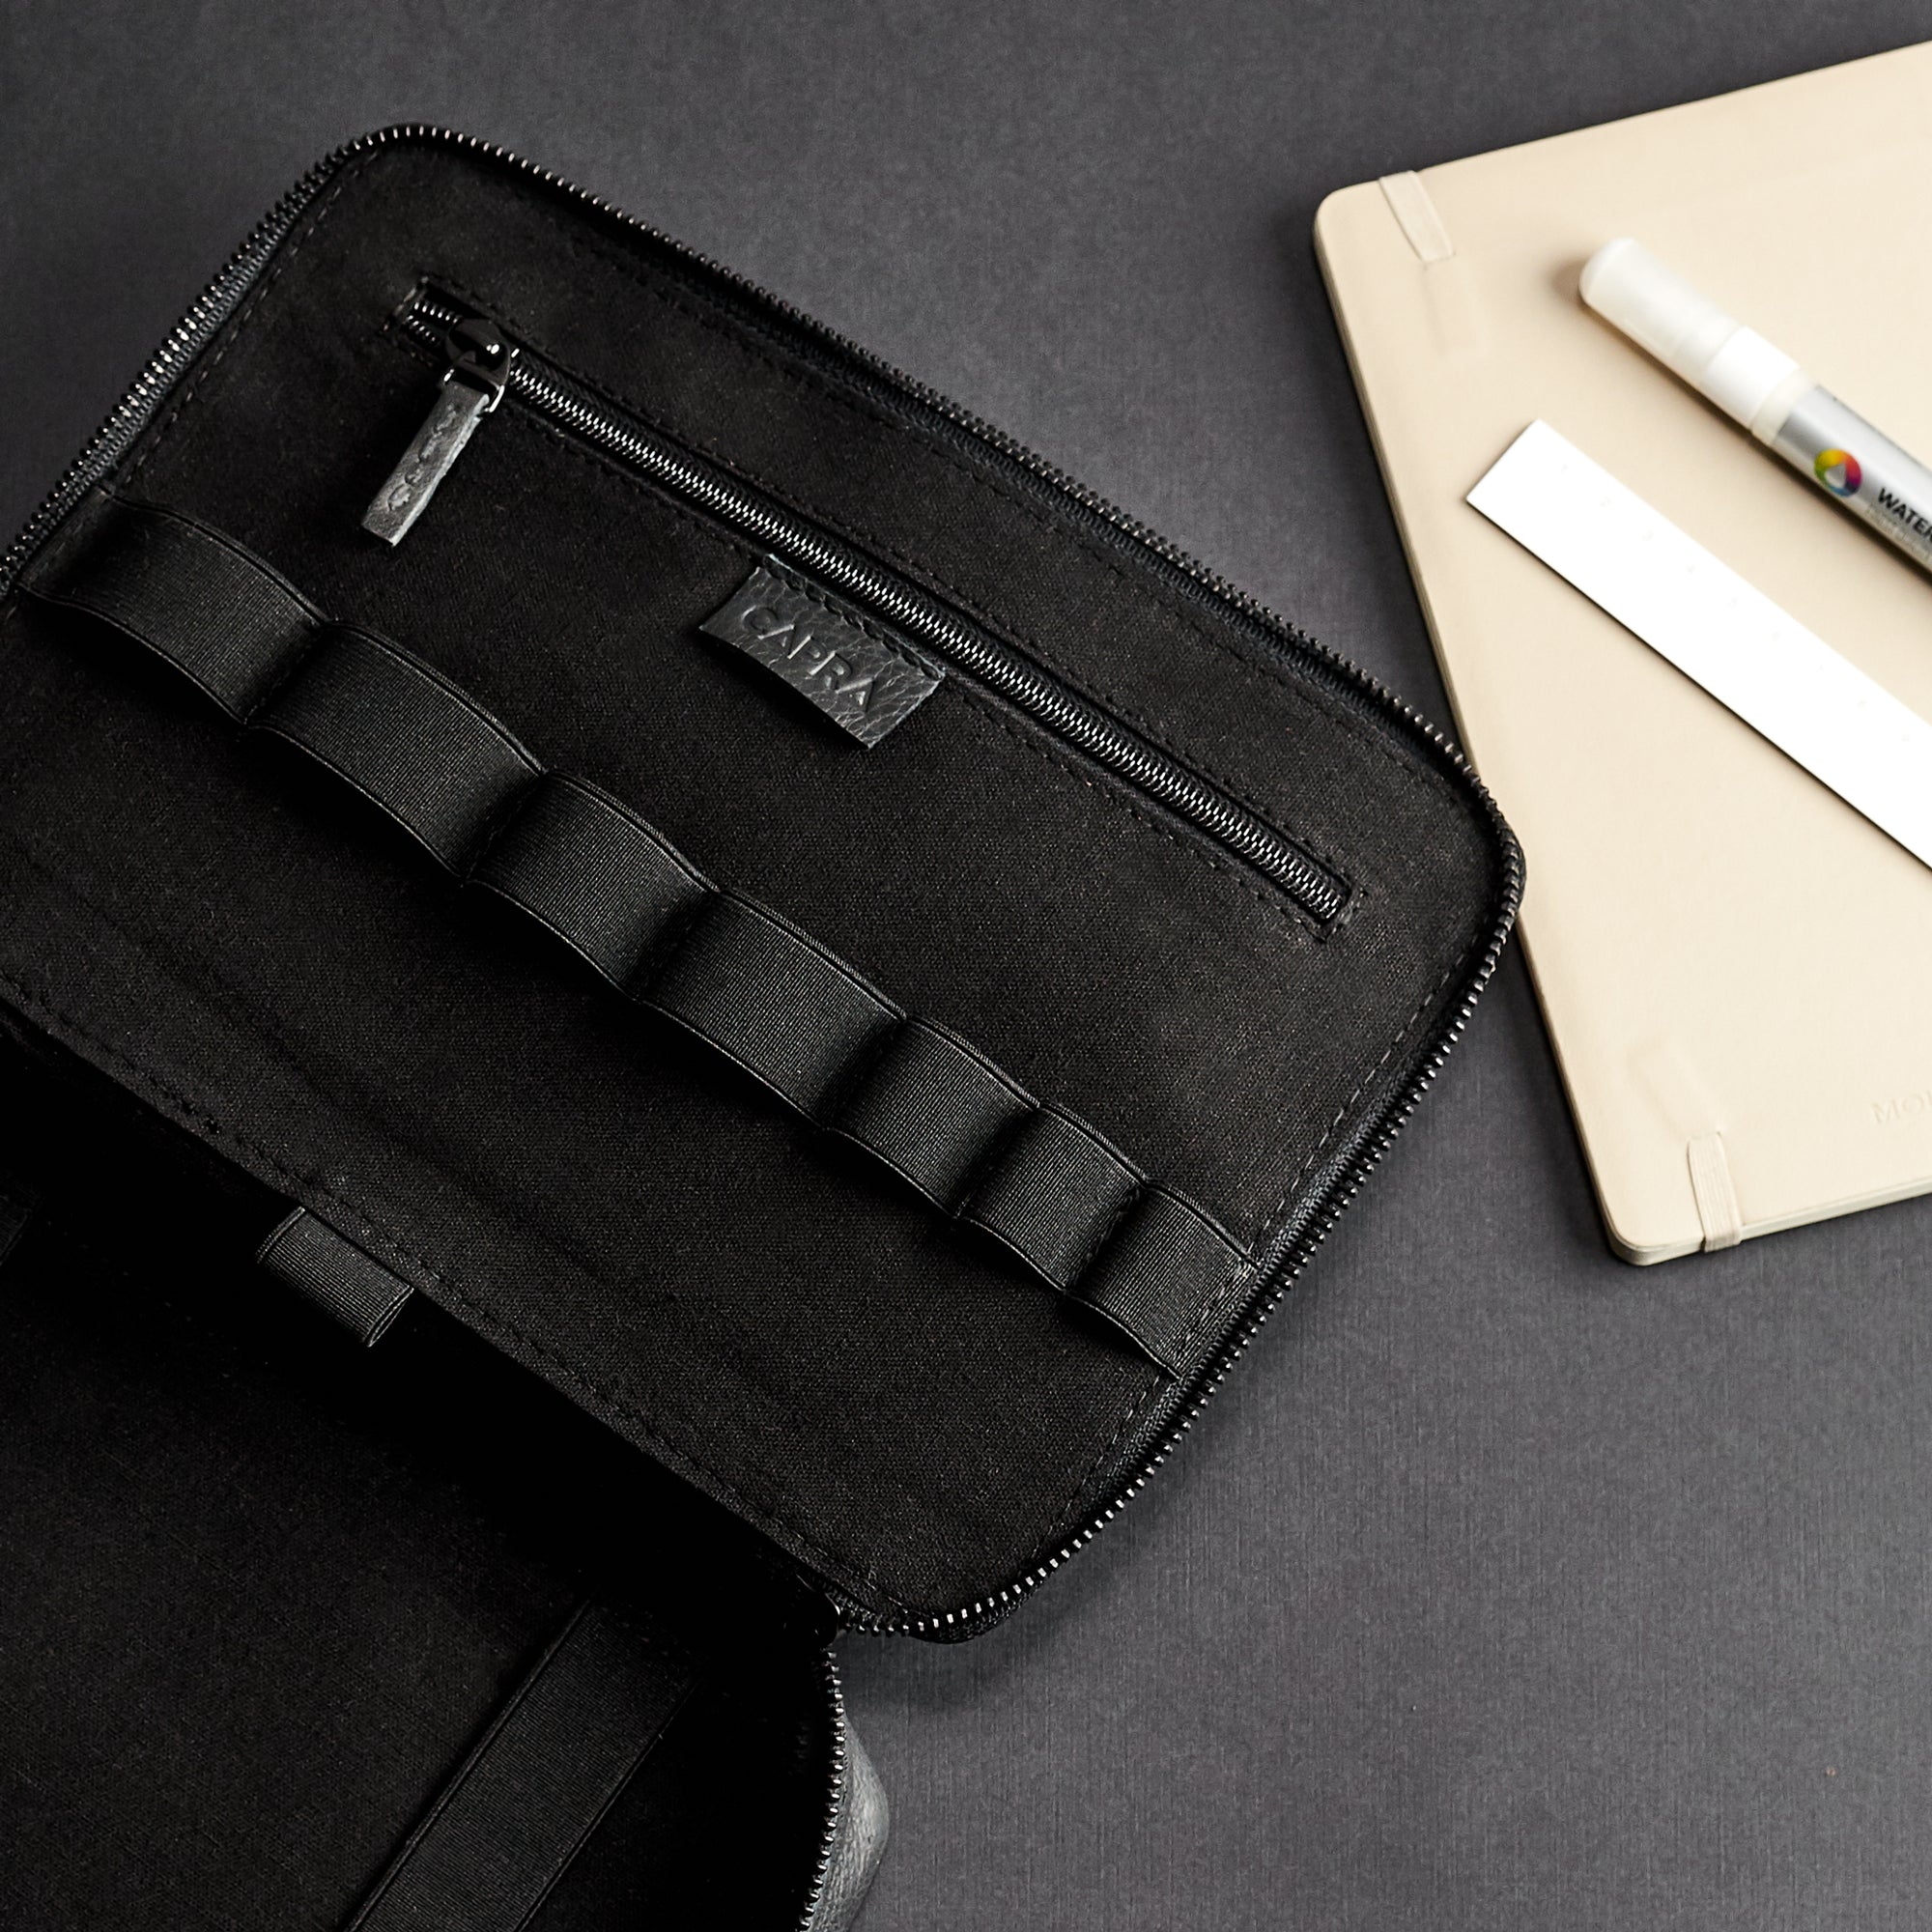 Organization elastic slots. Black gear bags by Capra Leather. Fits iPad Pro 11